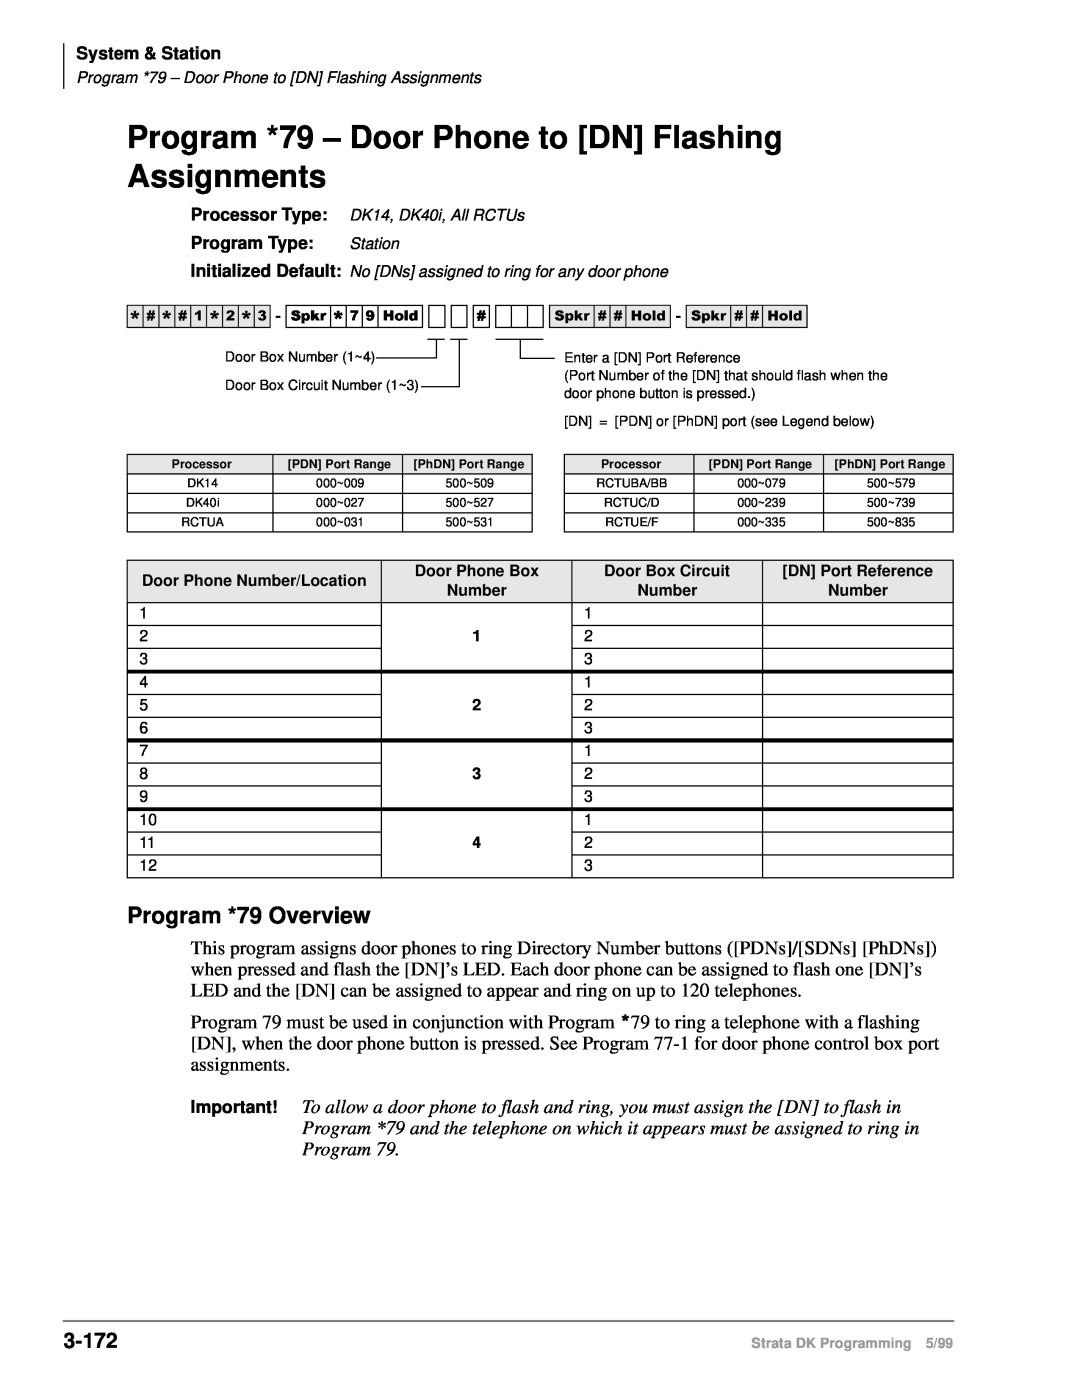 Toshiba dk14 manual 6SNU +ROG, Program *79 Overview, 3-172 